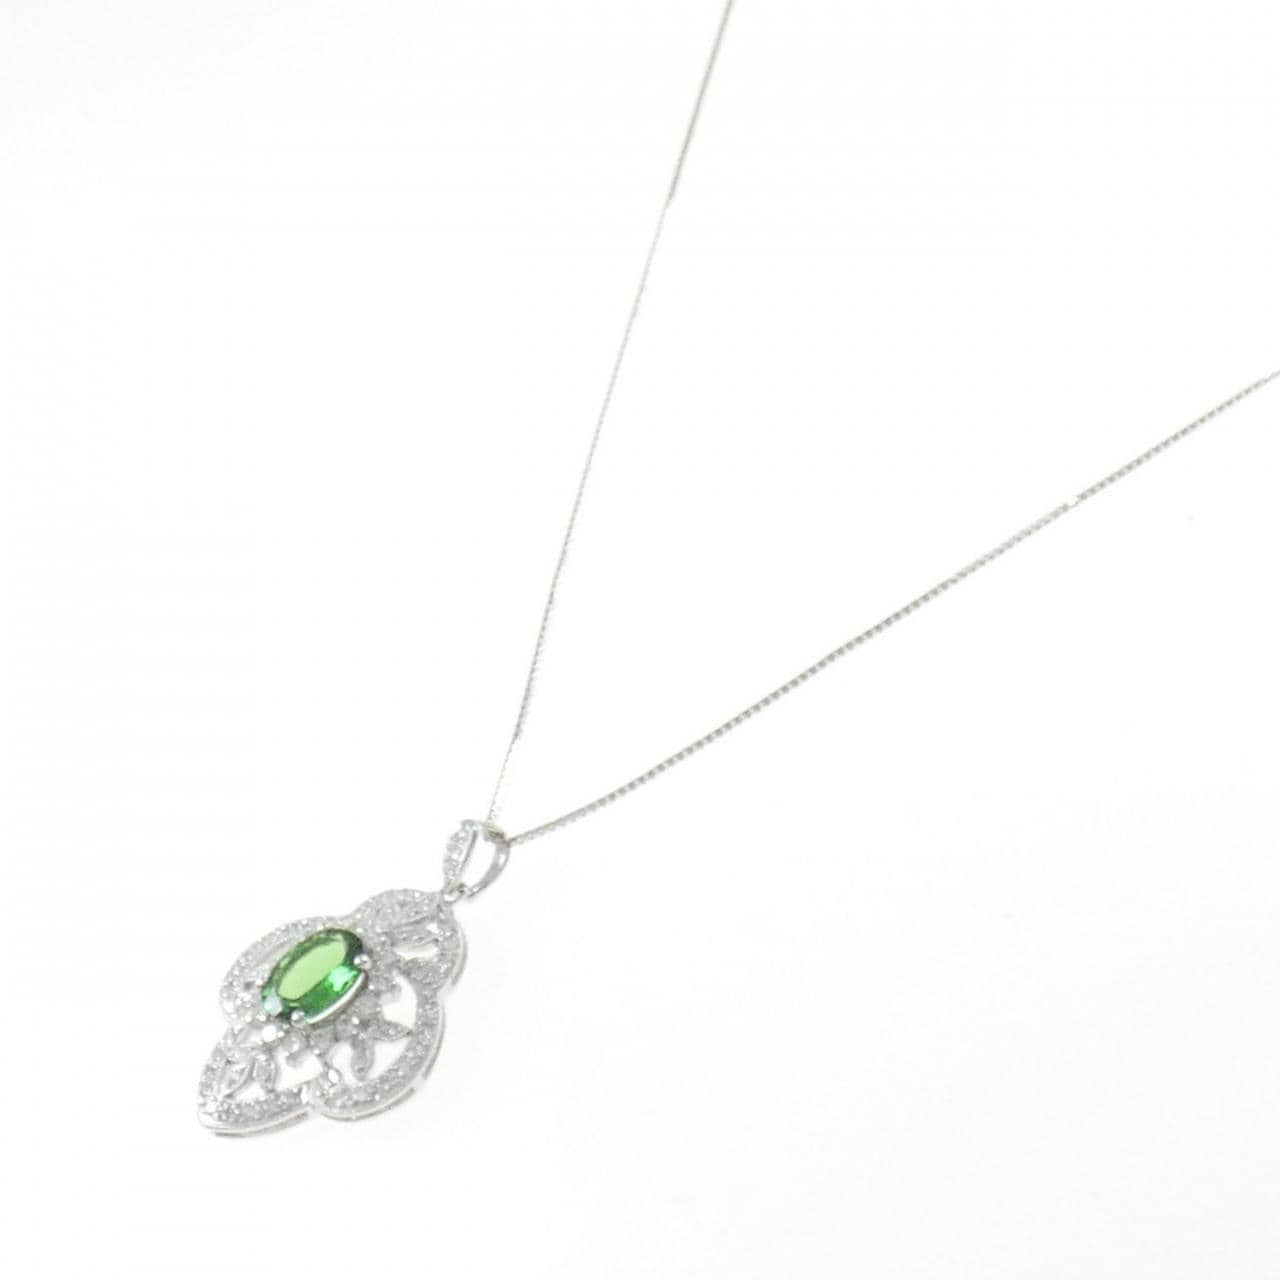 K18WG green Garnet necklace 1.34CT